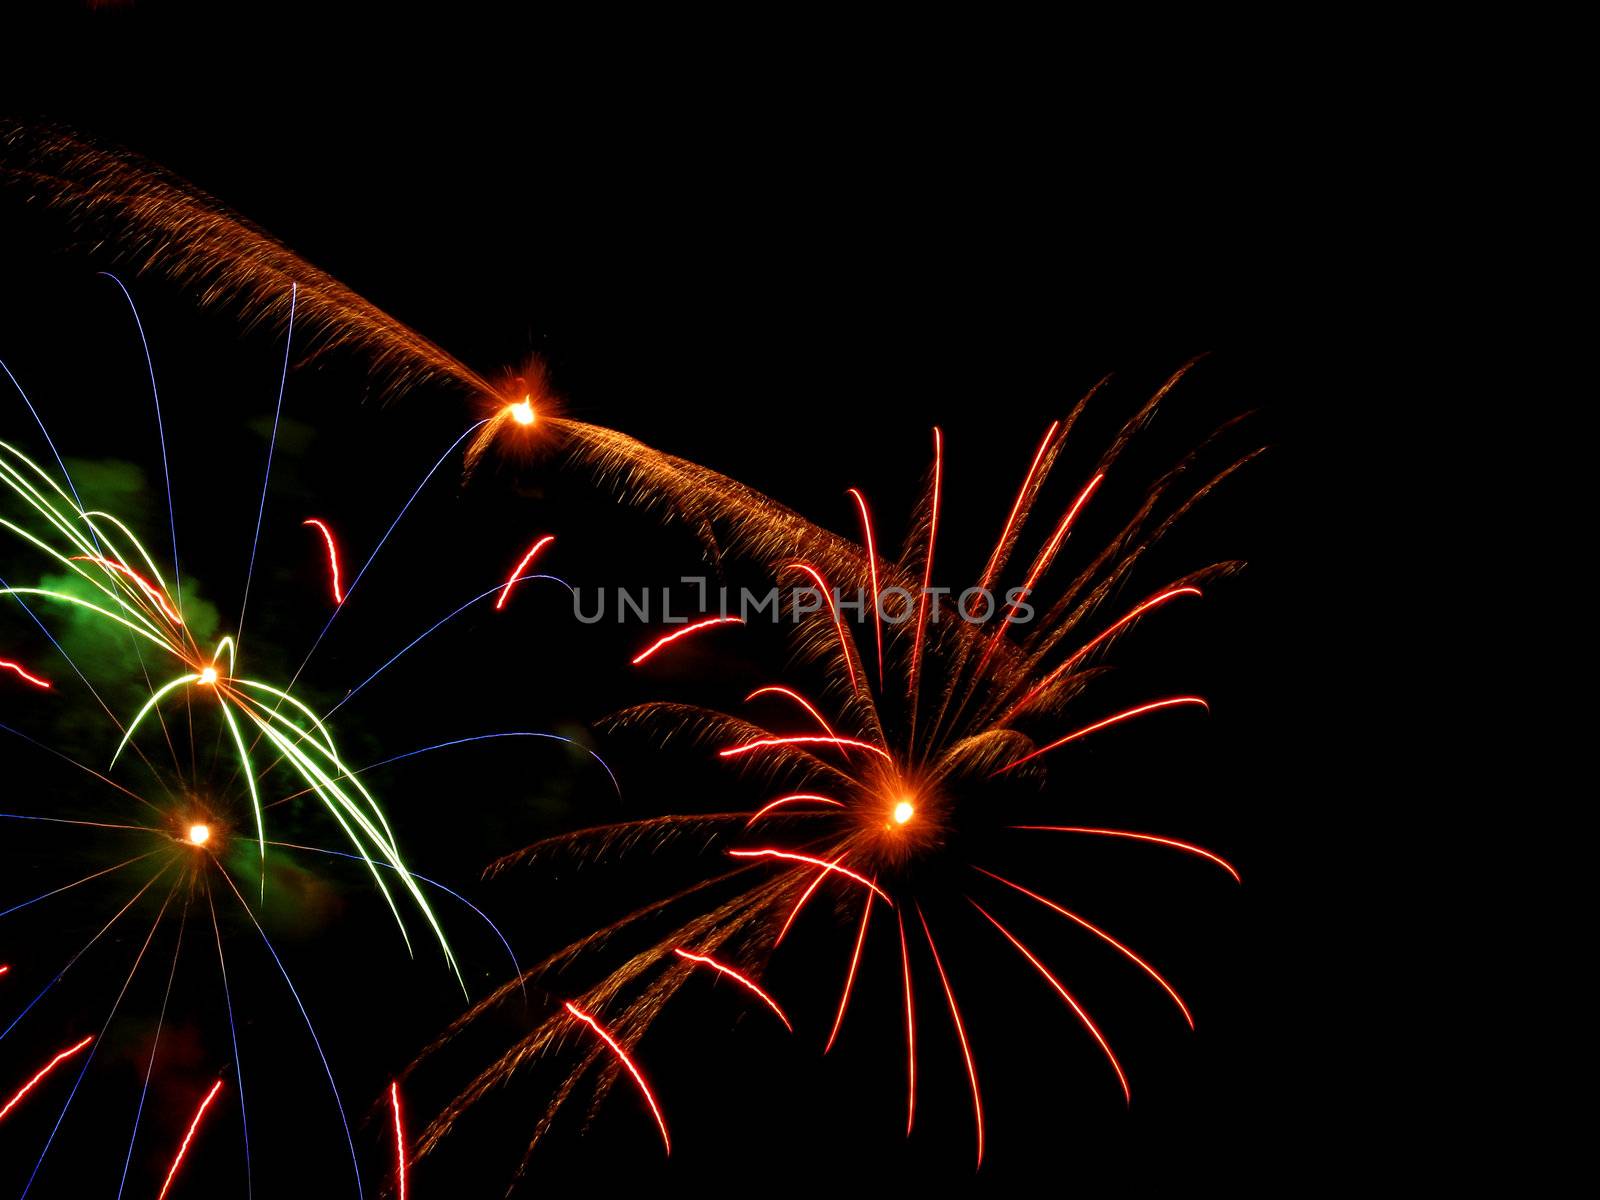 Fireworks by tommroch